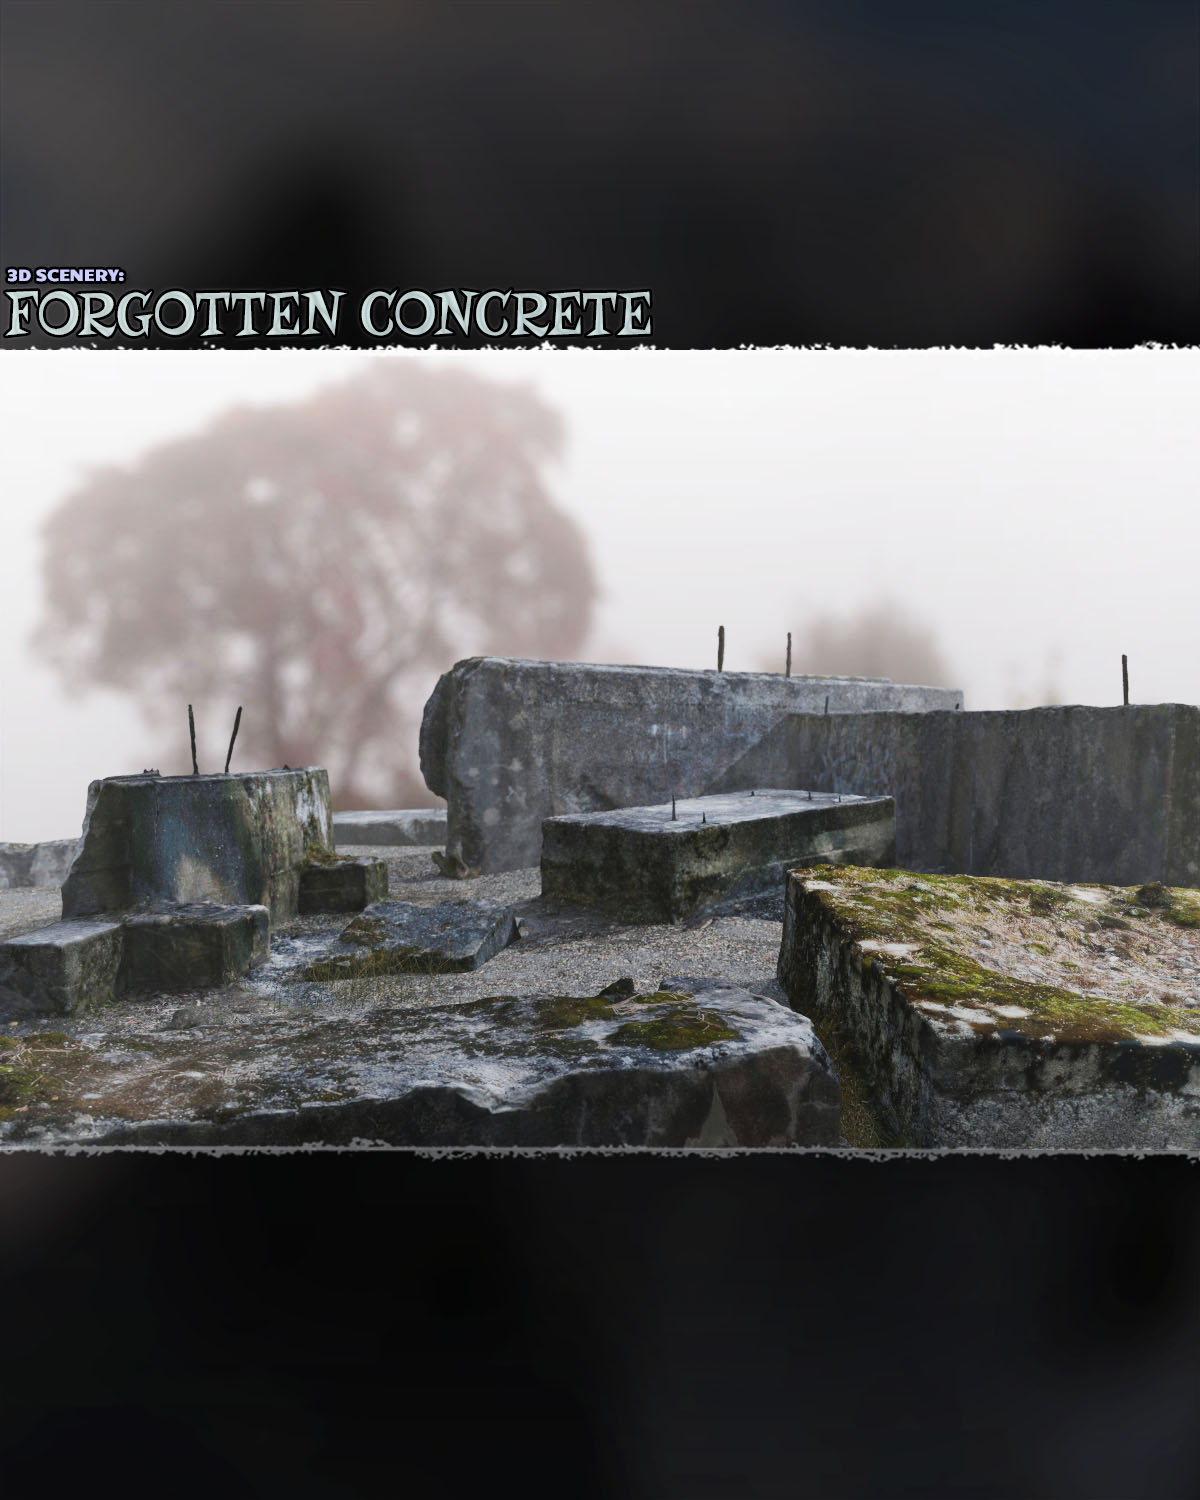 3d Scenery: Forgotten Concrete